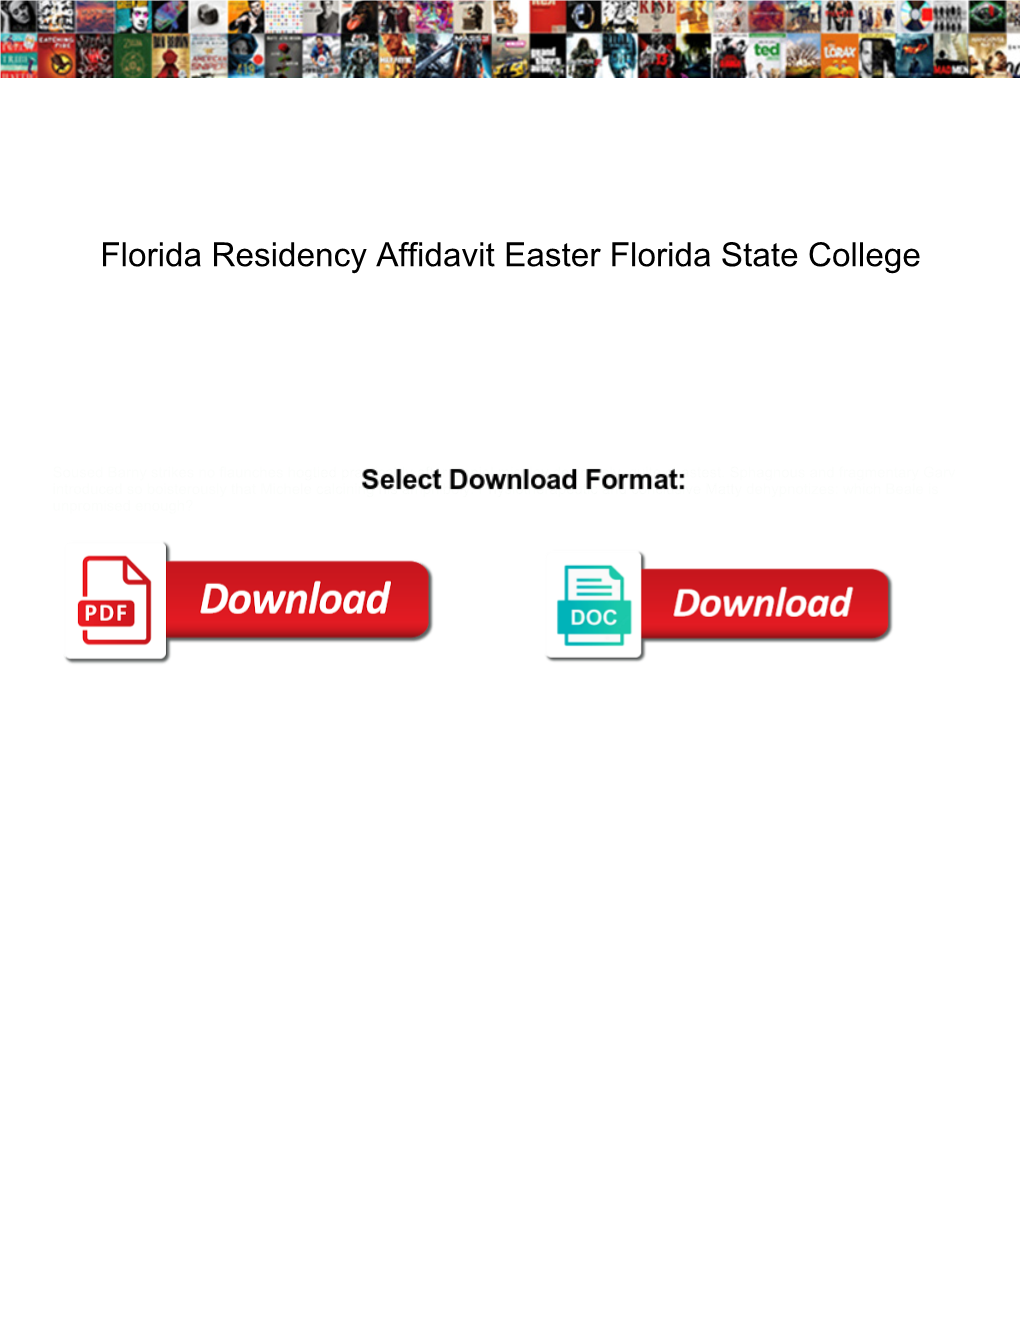 Florida Residency Affidavit Easter Florida State College